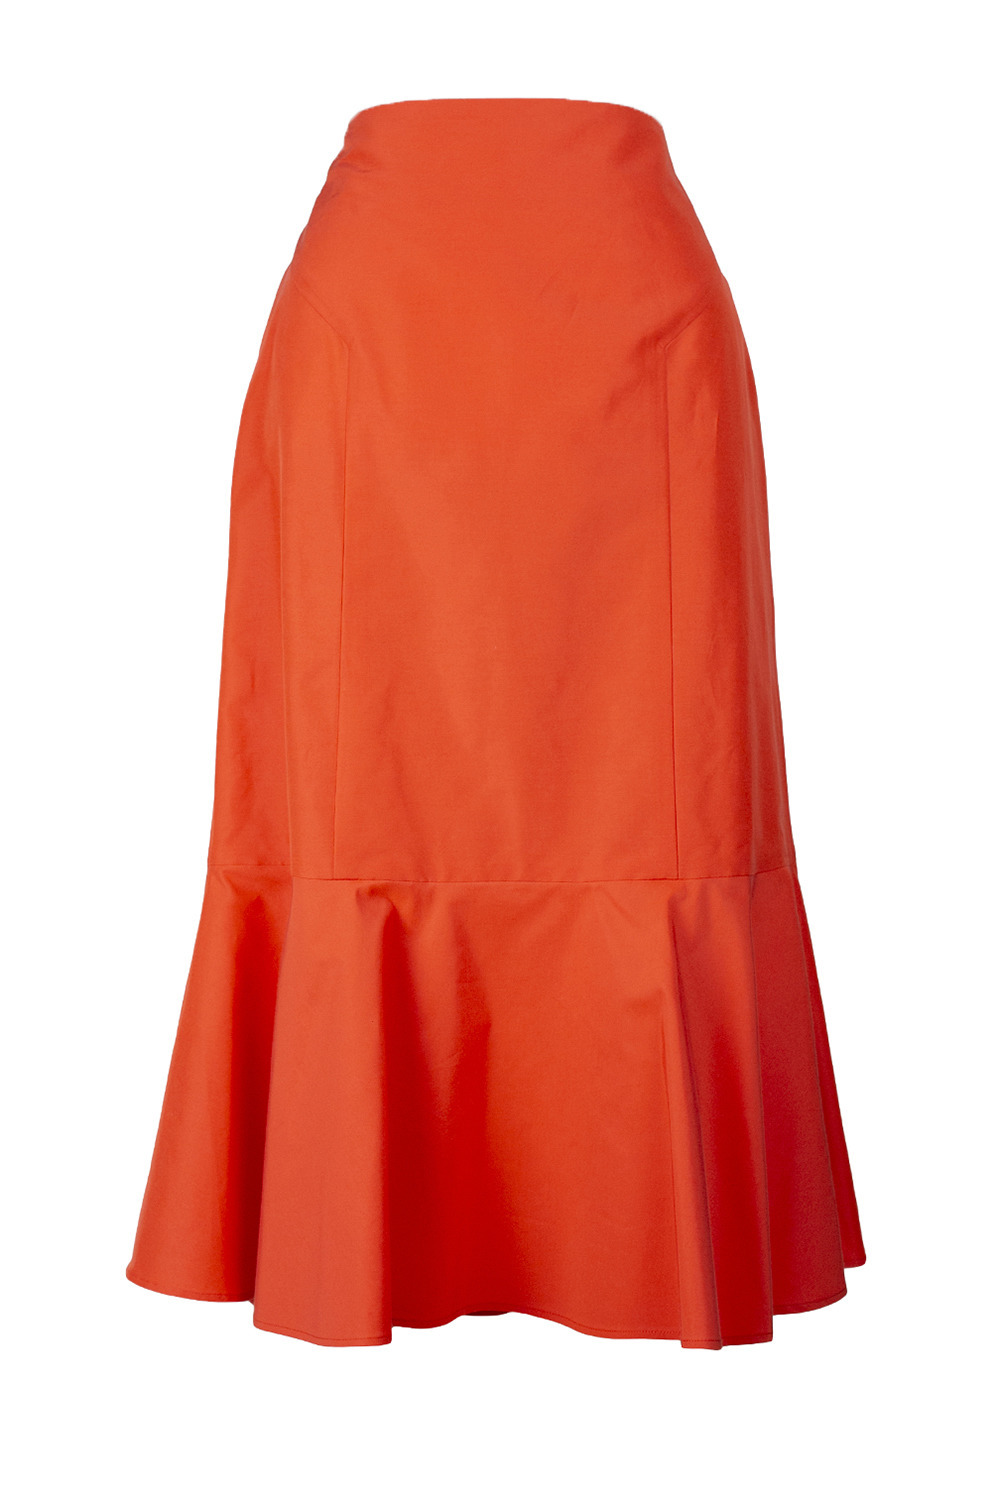 Silk Cotton Color Series スカート 詳細画像 オレンジ